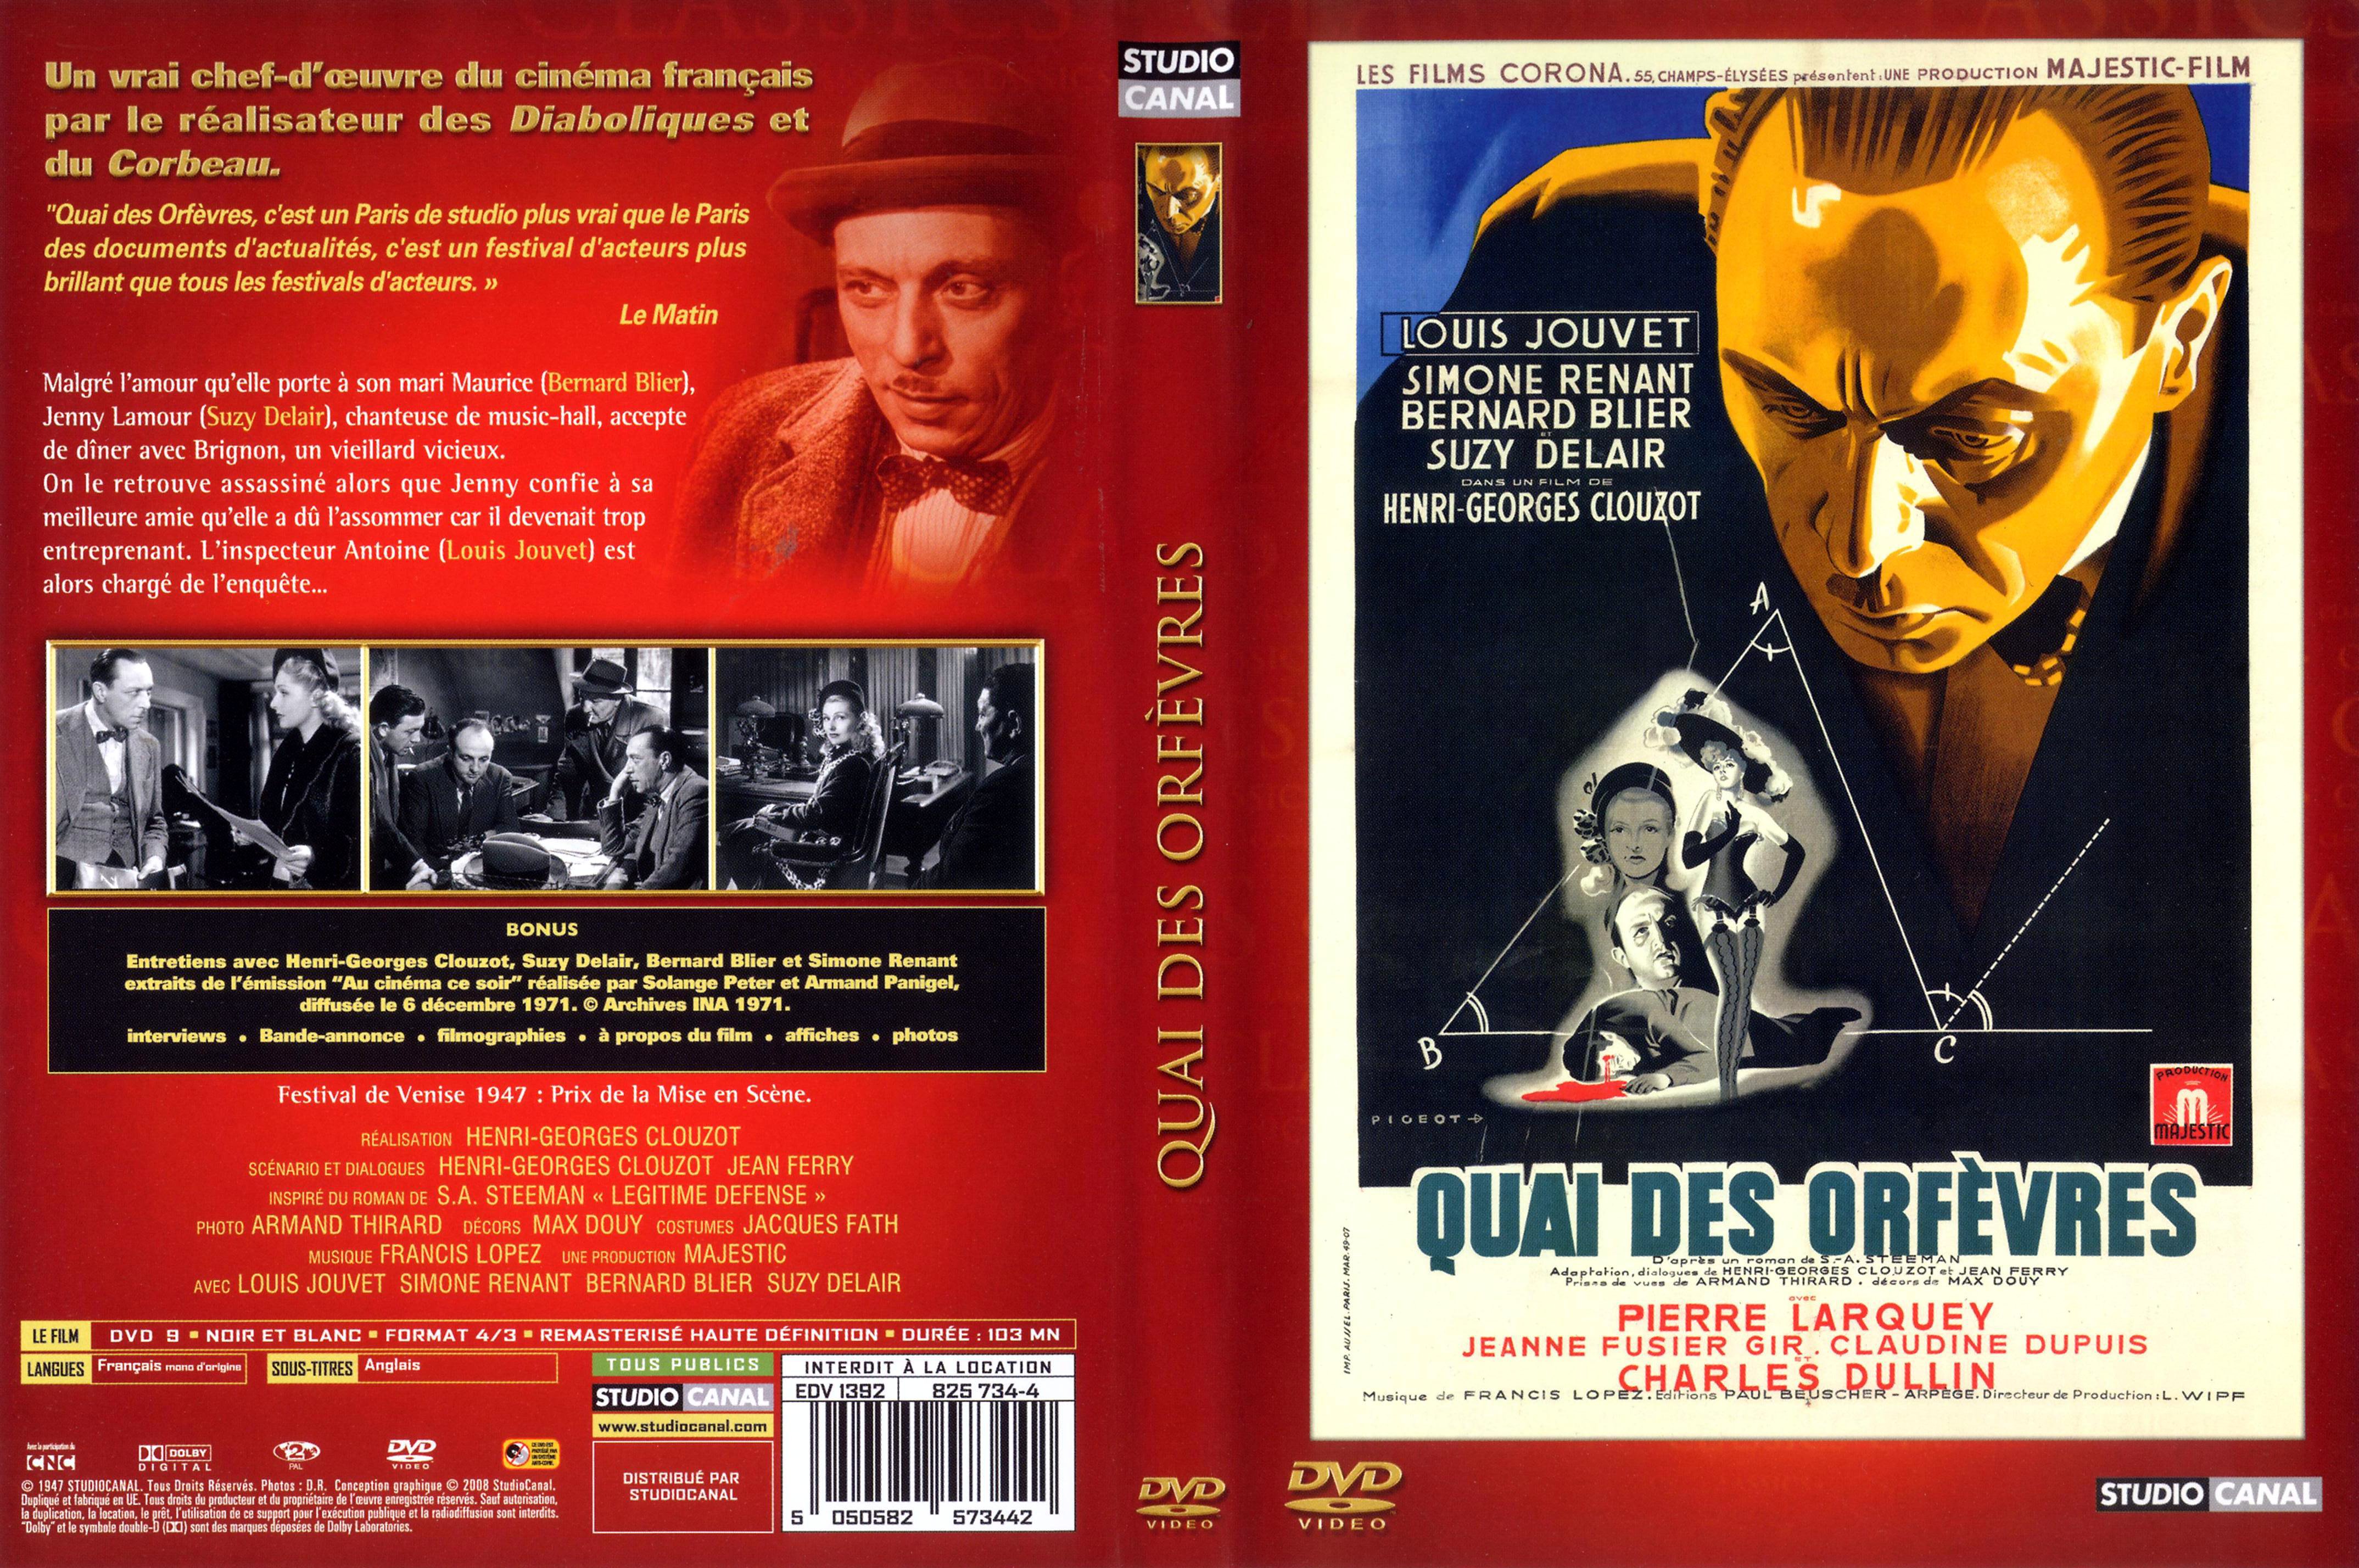 Jaquette DVD Quai des orfevres v2